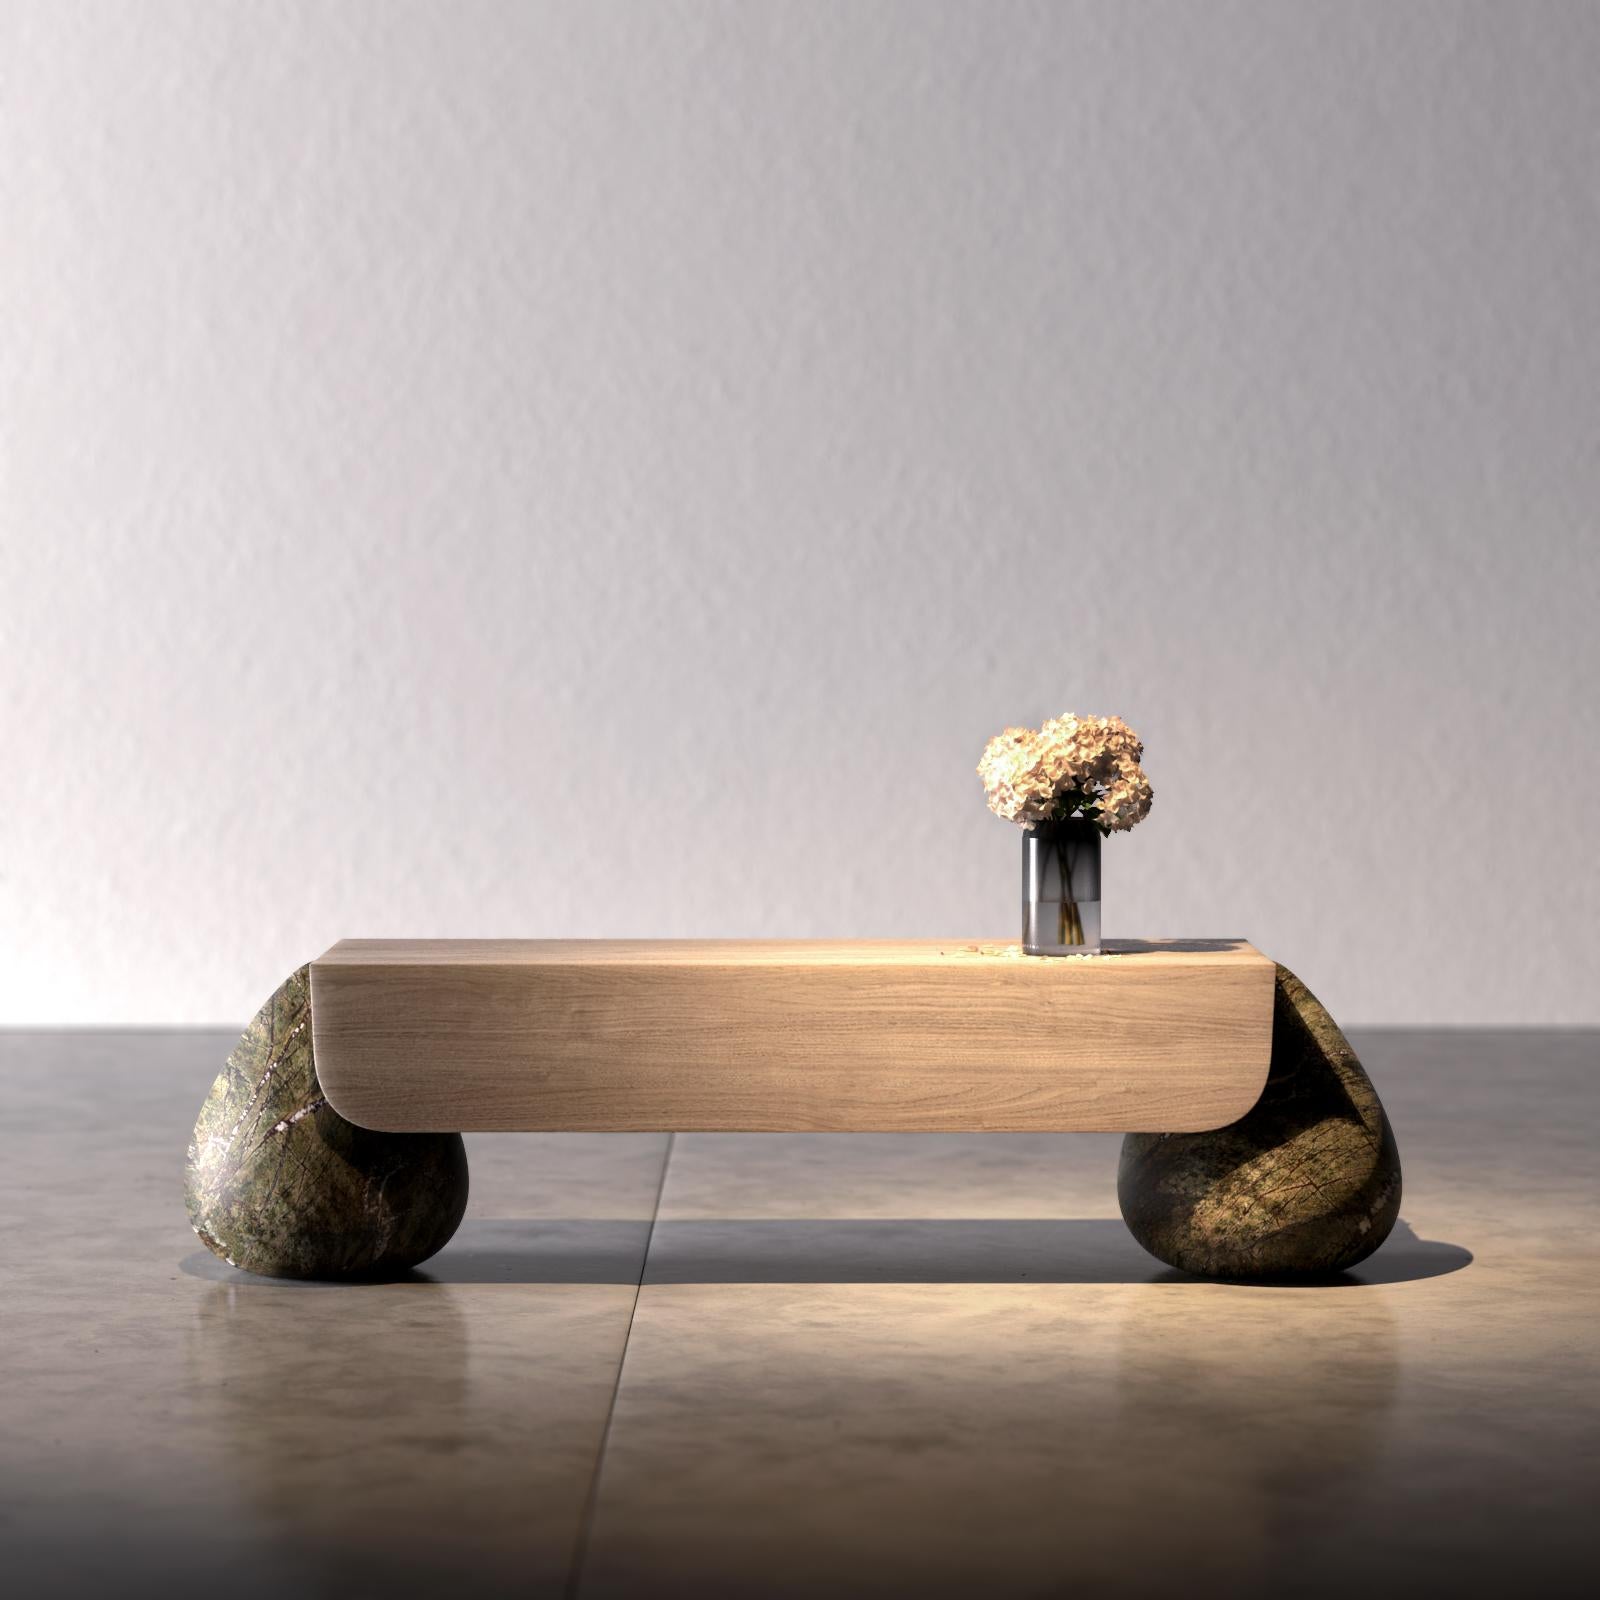 Flint bench by Marmi Serafini
Dimensions: D 38 x W 156.6 x H 41 cm
Materials: marble, wood
Weight: 150 kg

